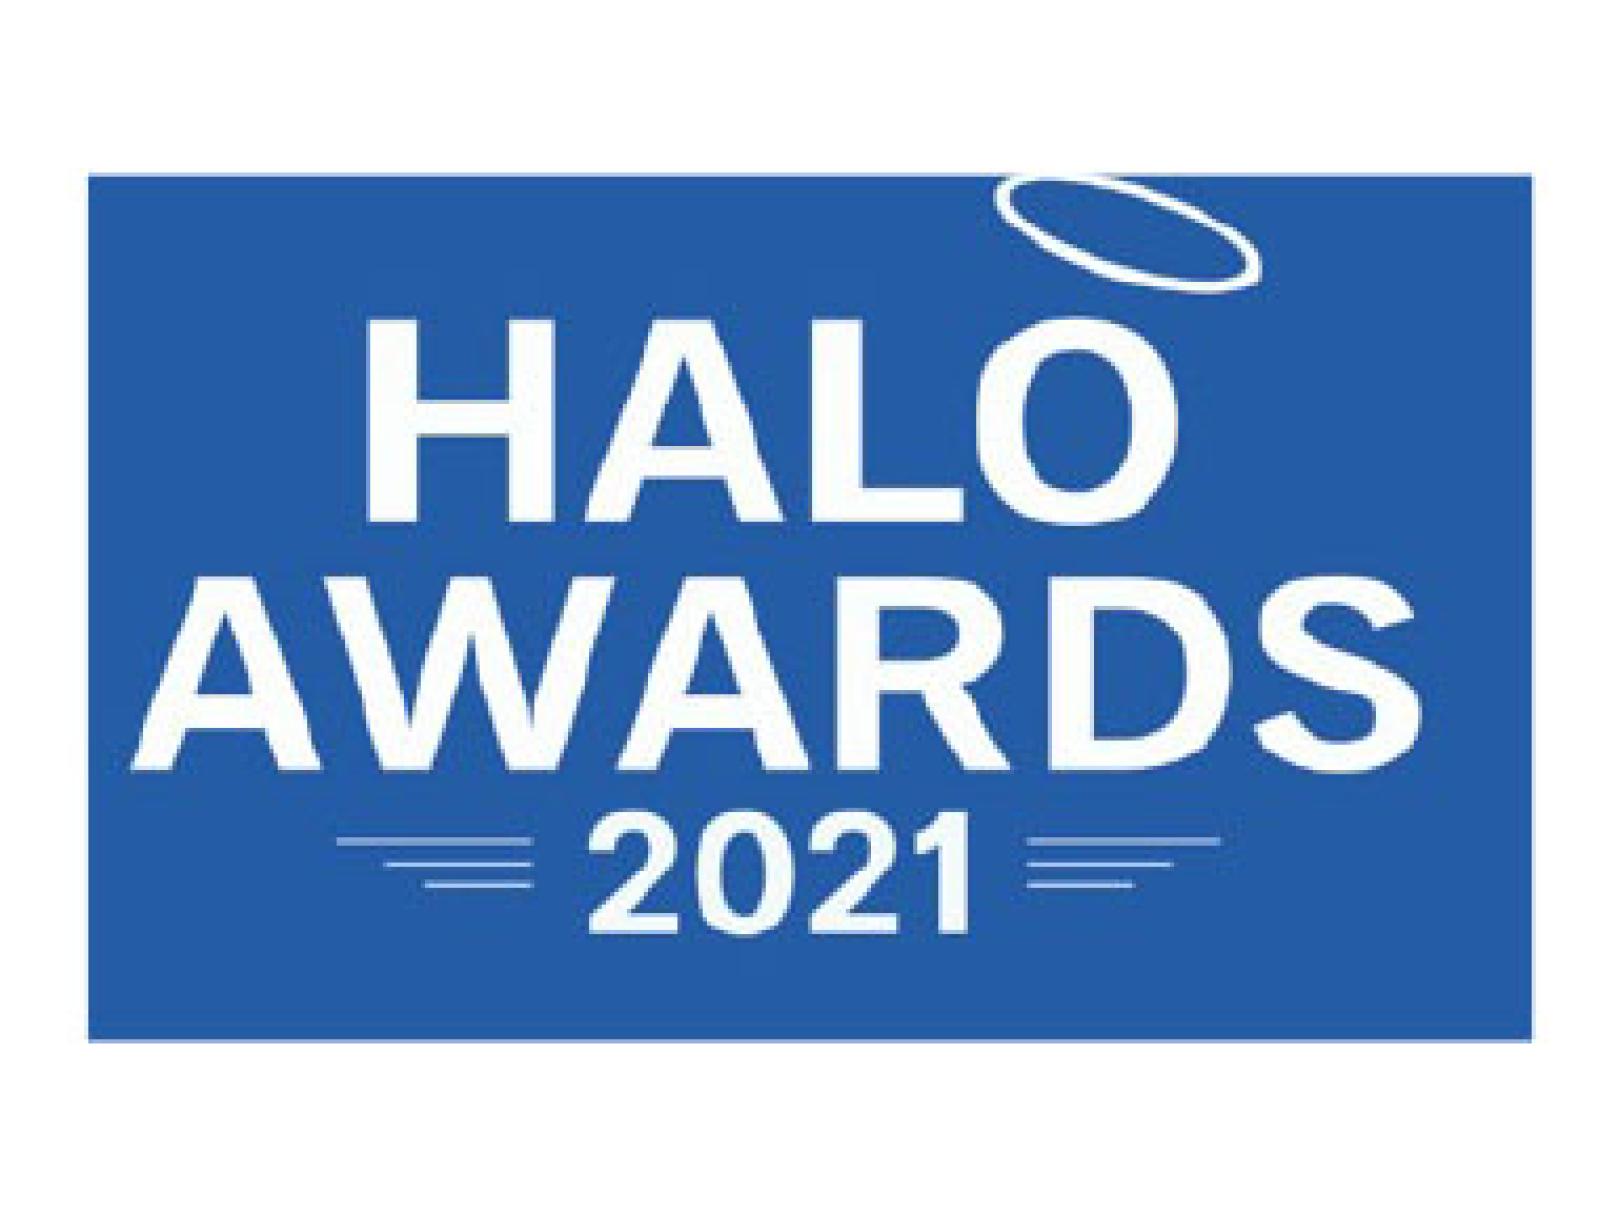 Halo awards 2021 logo